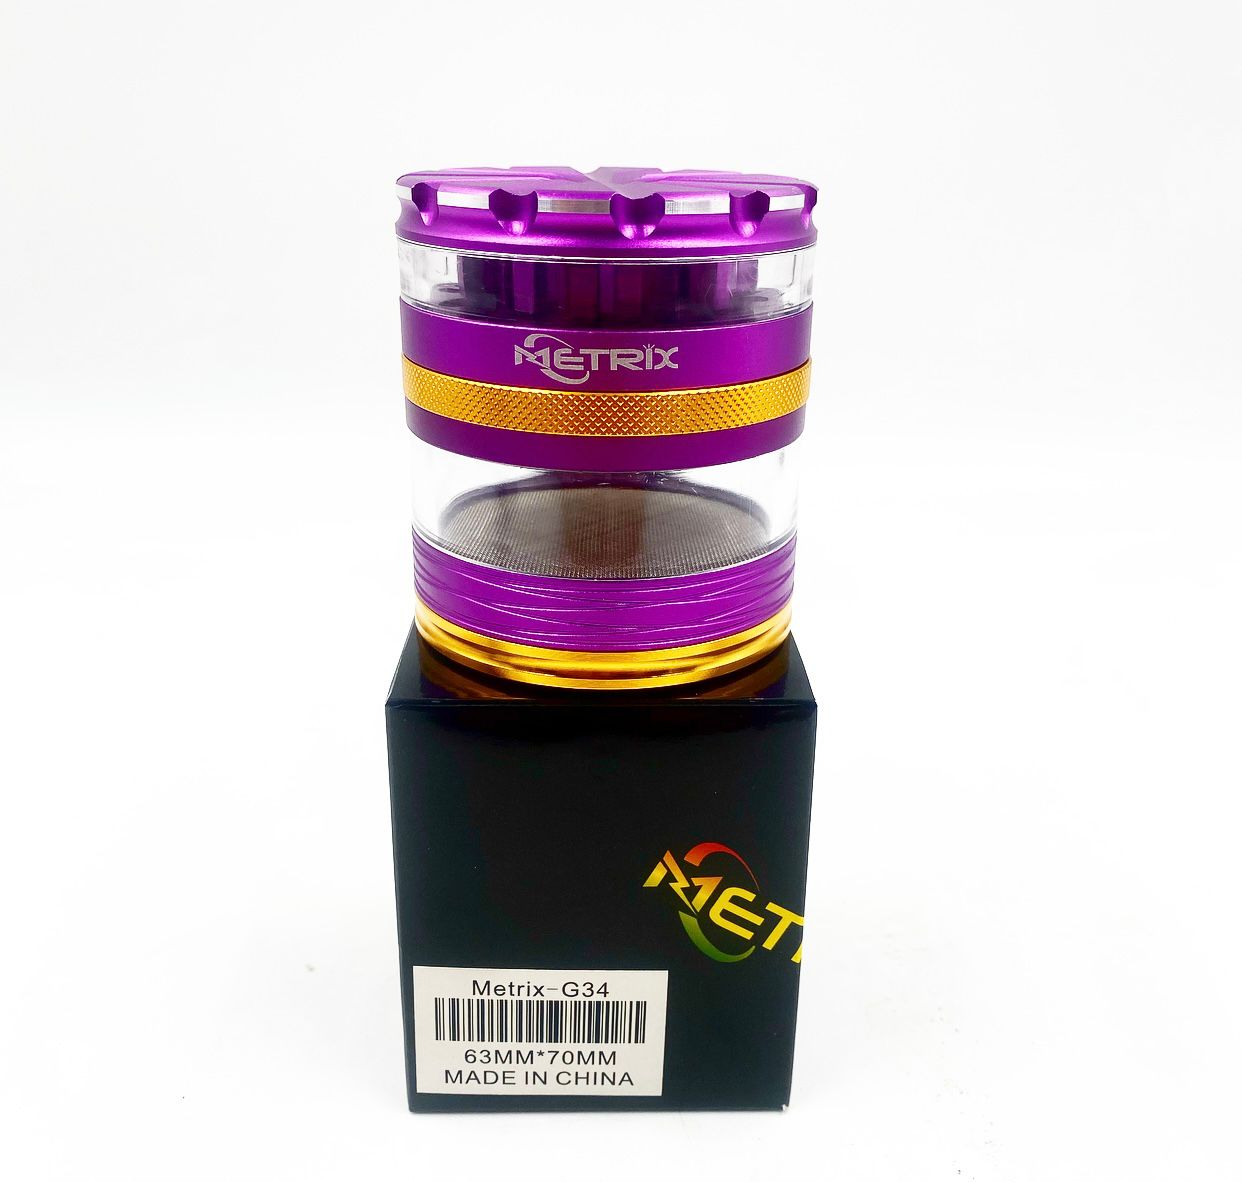 Metrix-G34 Purple/Yellow Grinder